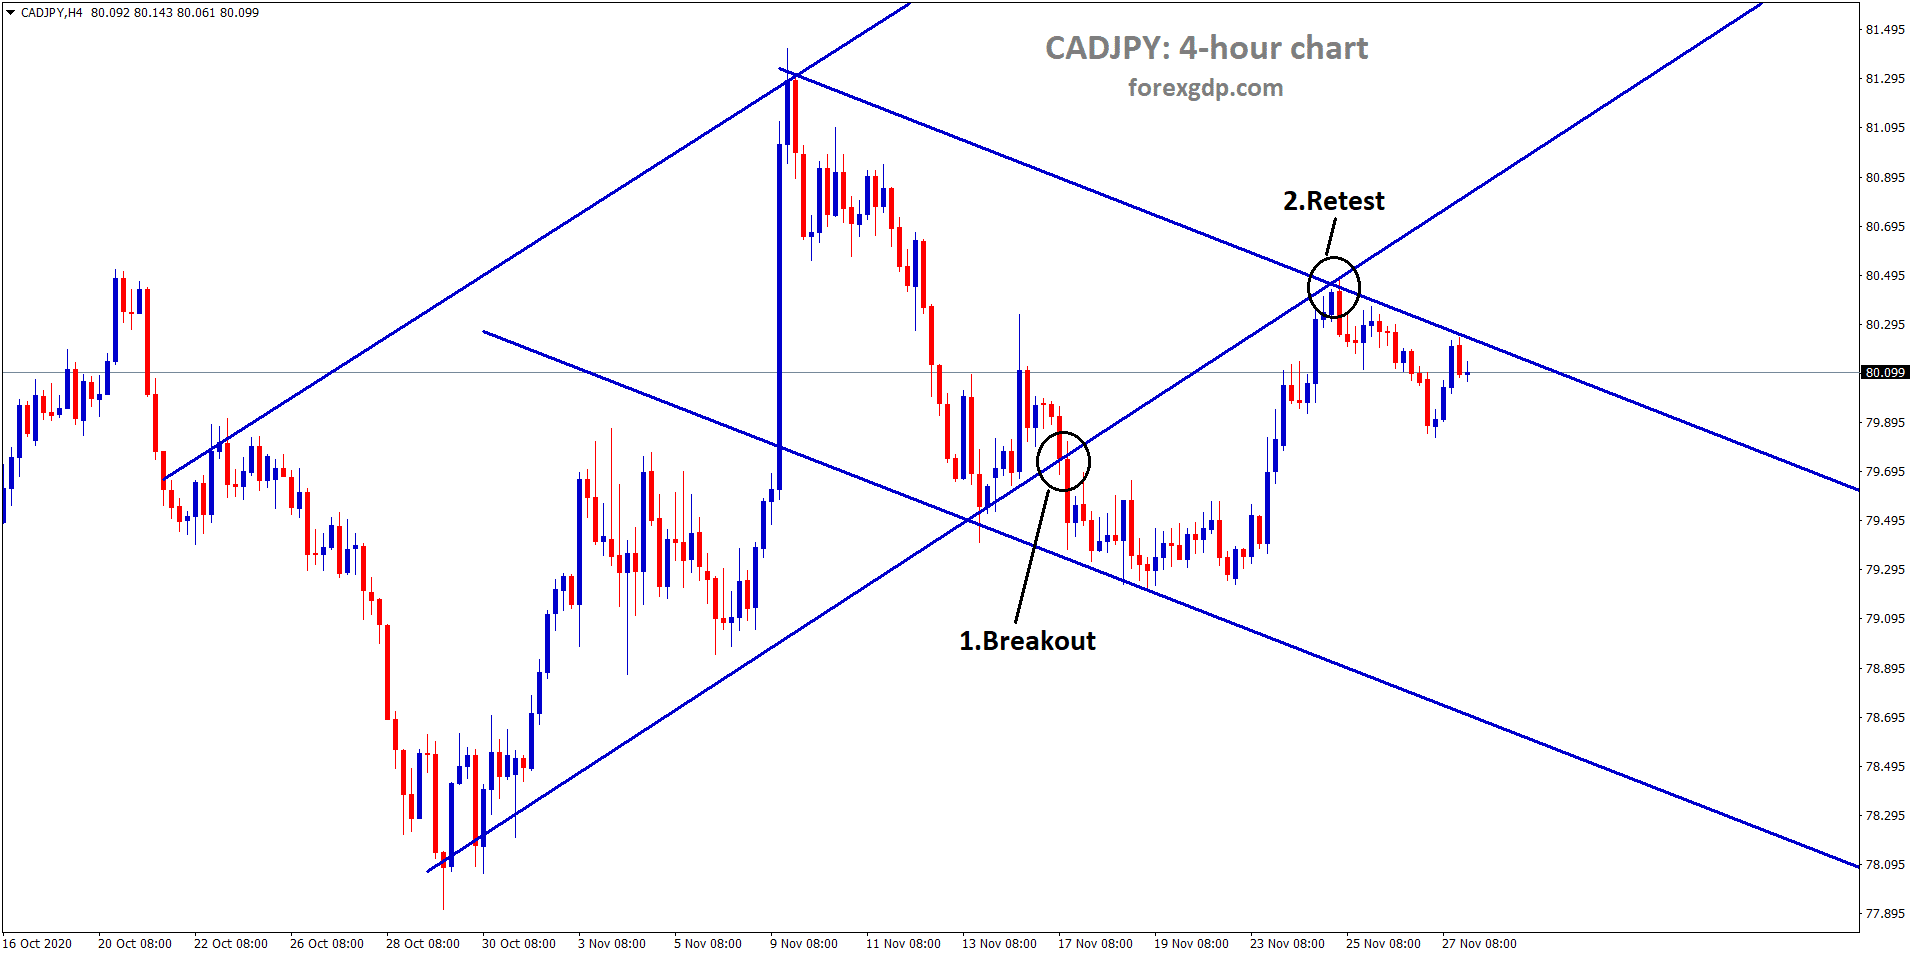 CADJPY h4 breakout retest chart analysis